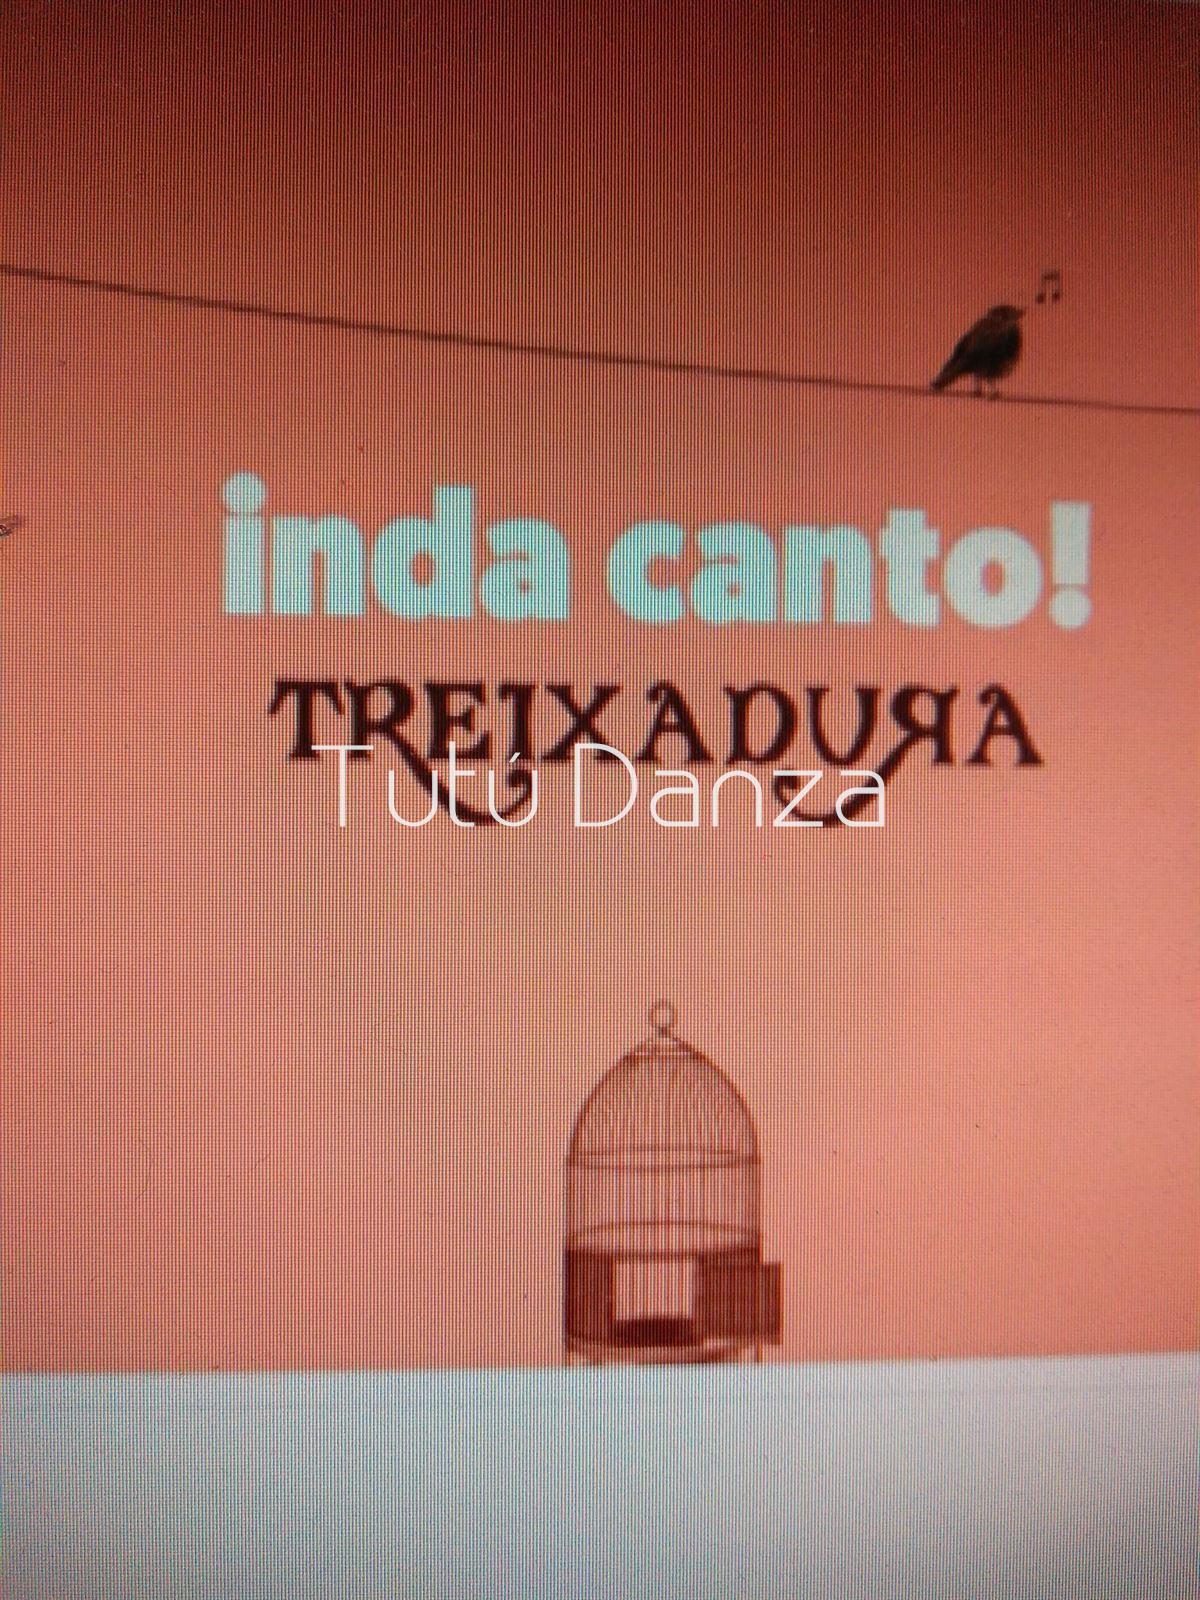 C.D. Inda canto. Treixadura - Imagen 1